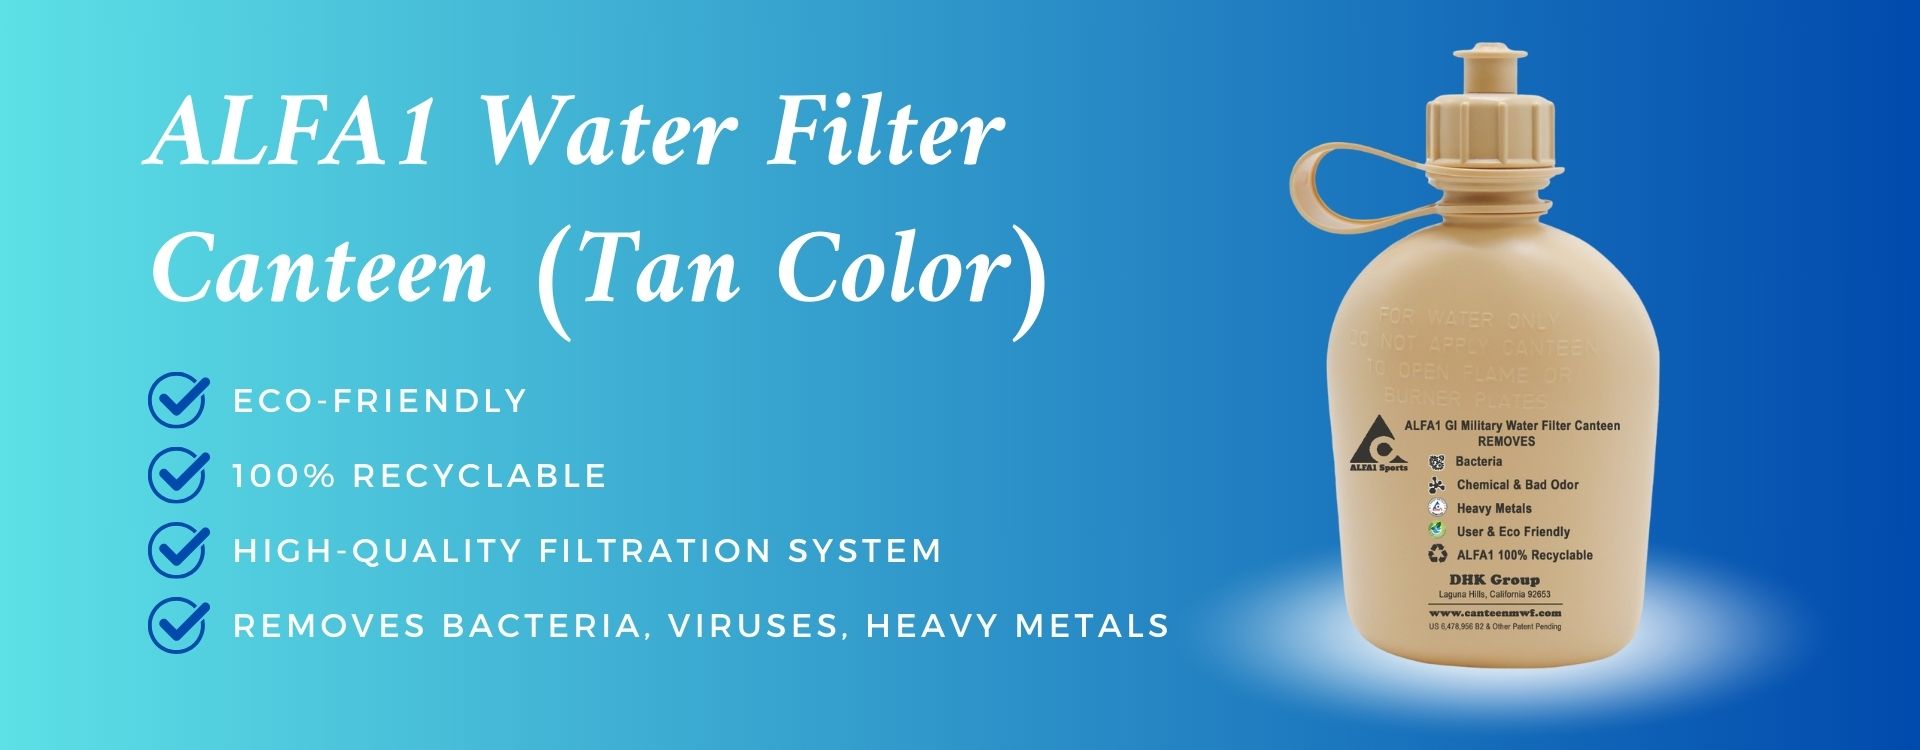 ALFA1 Water Filter Canteen Banner